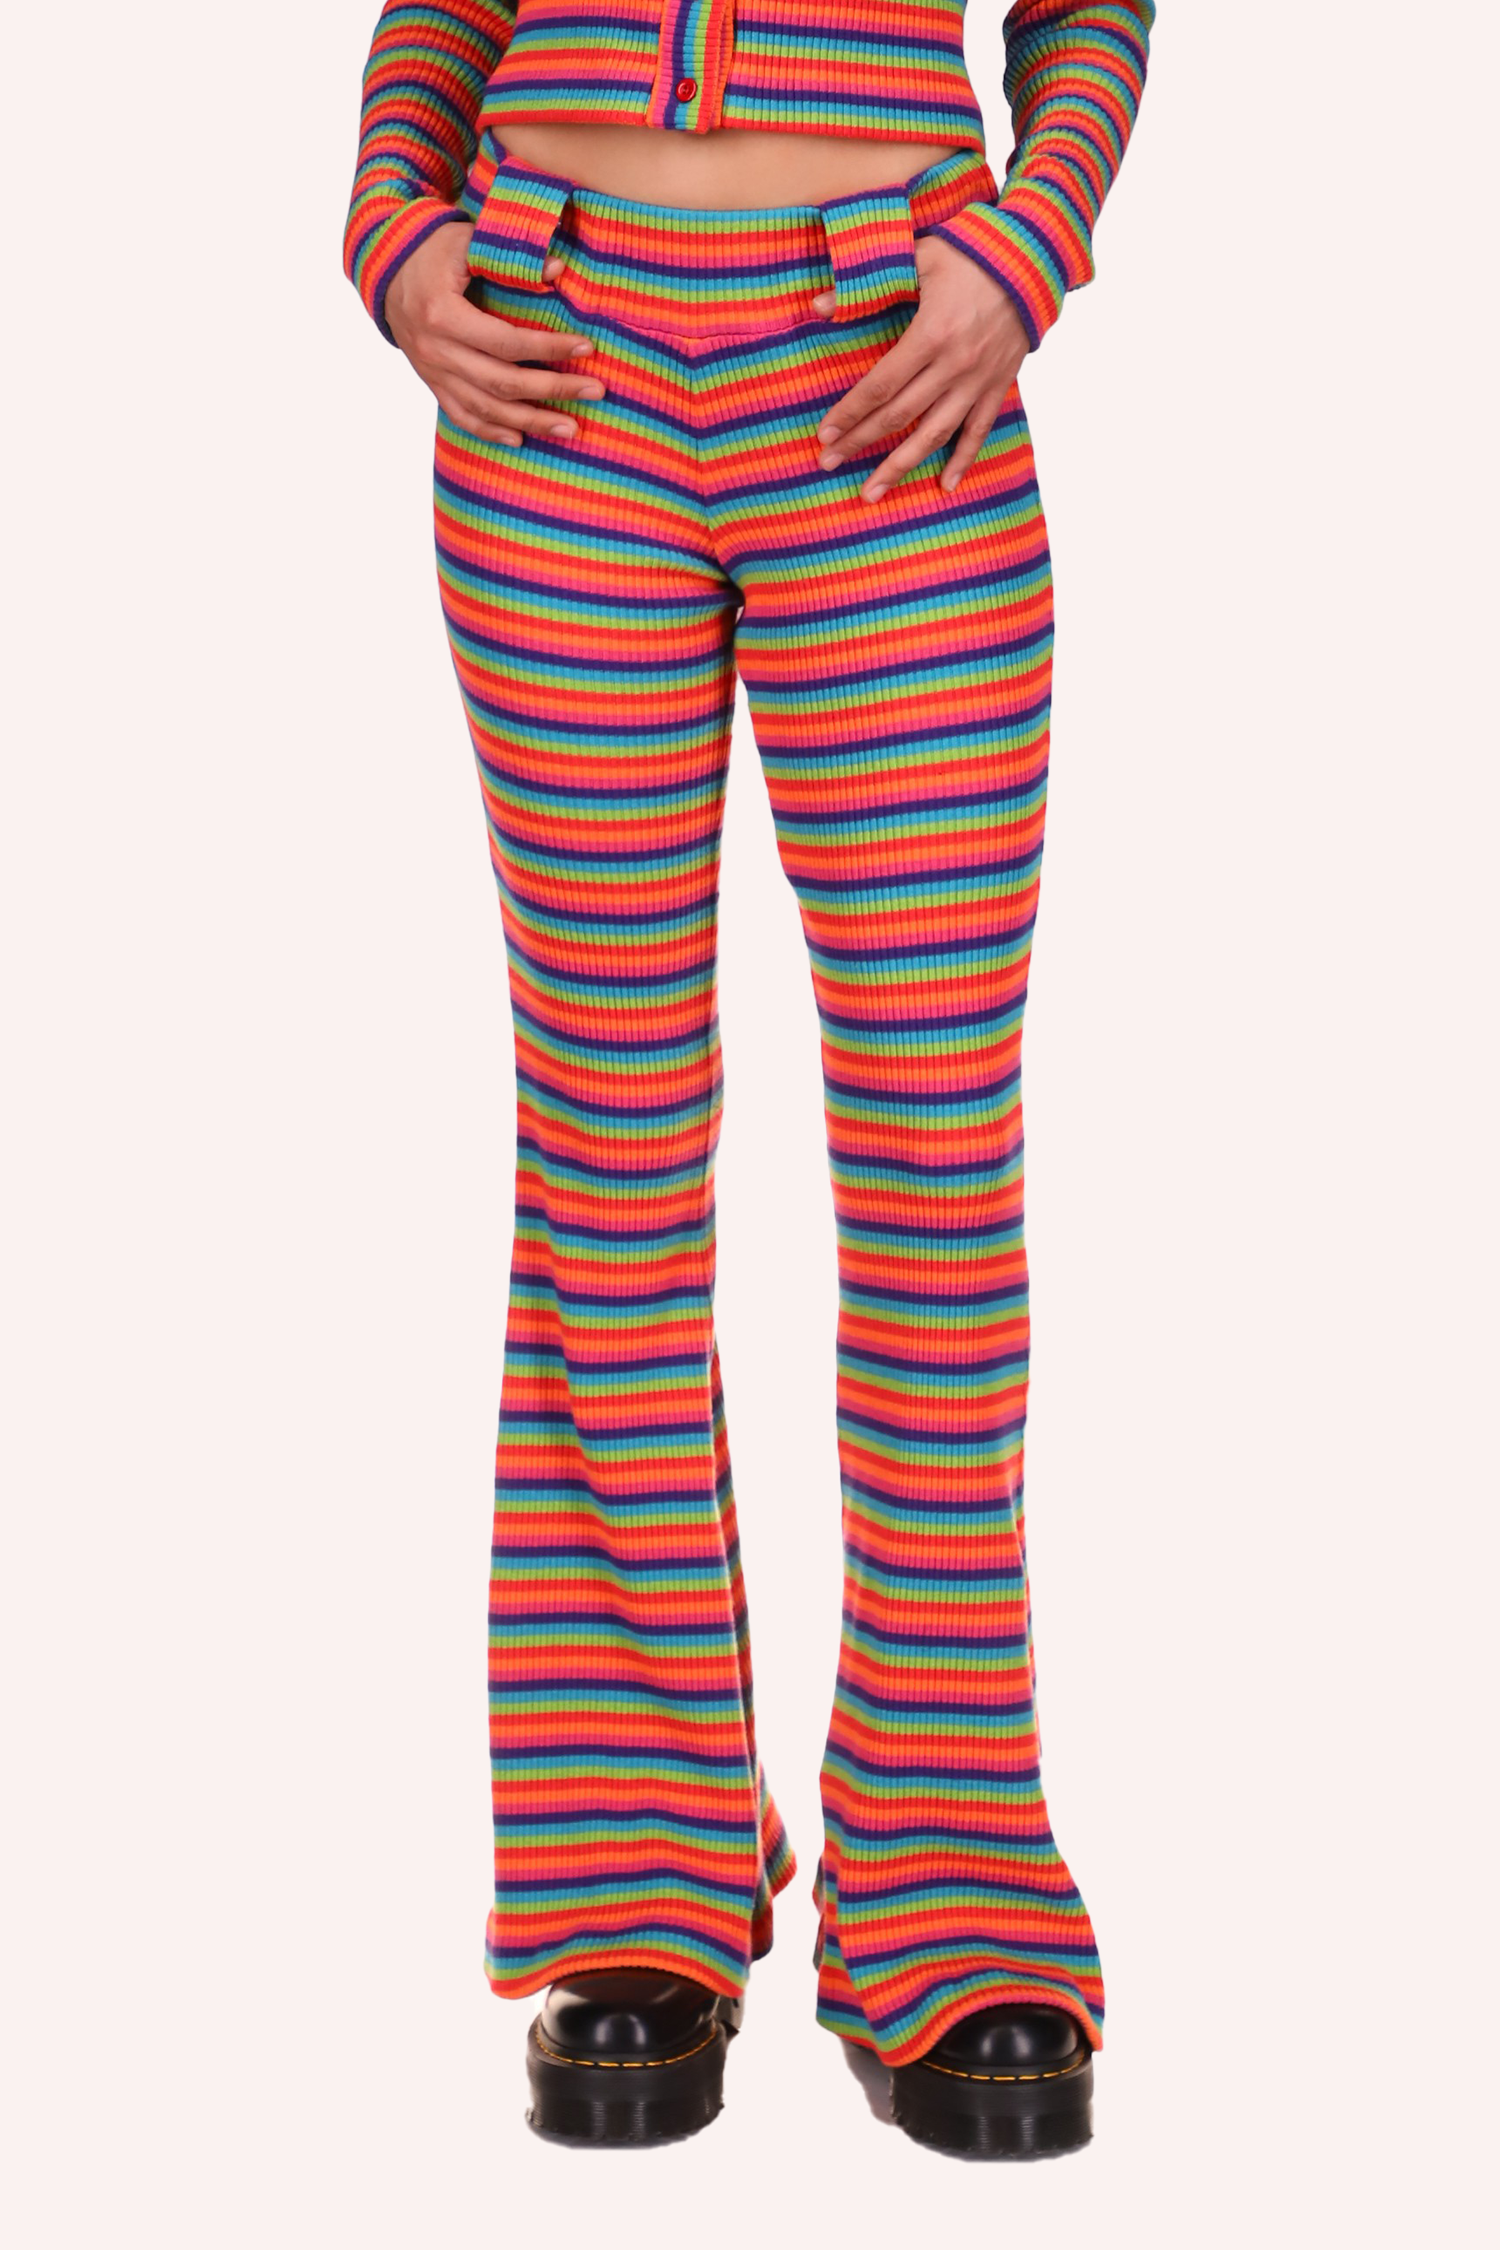 Pantalones de rayas arco - Anna Sui